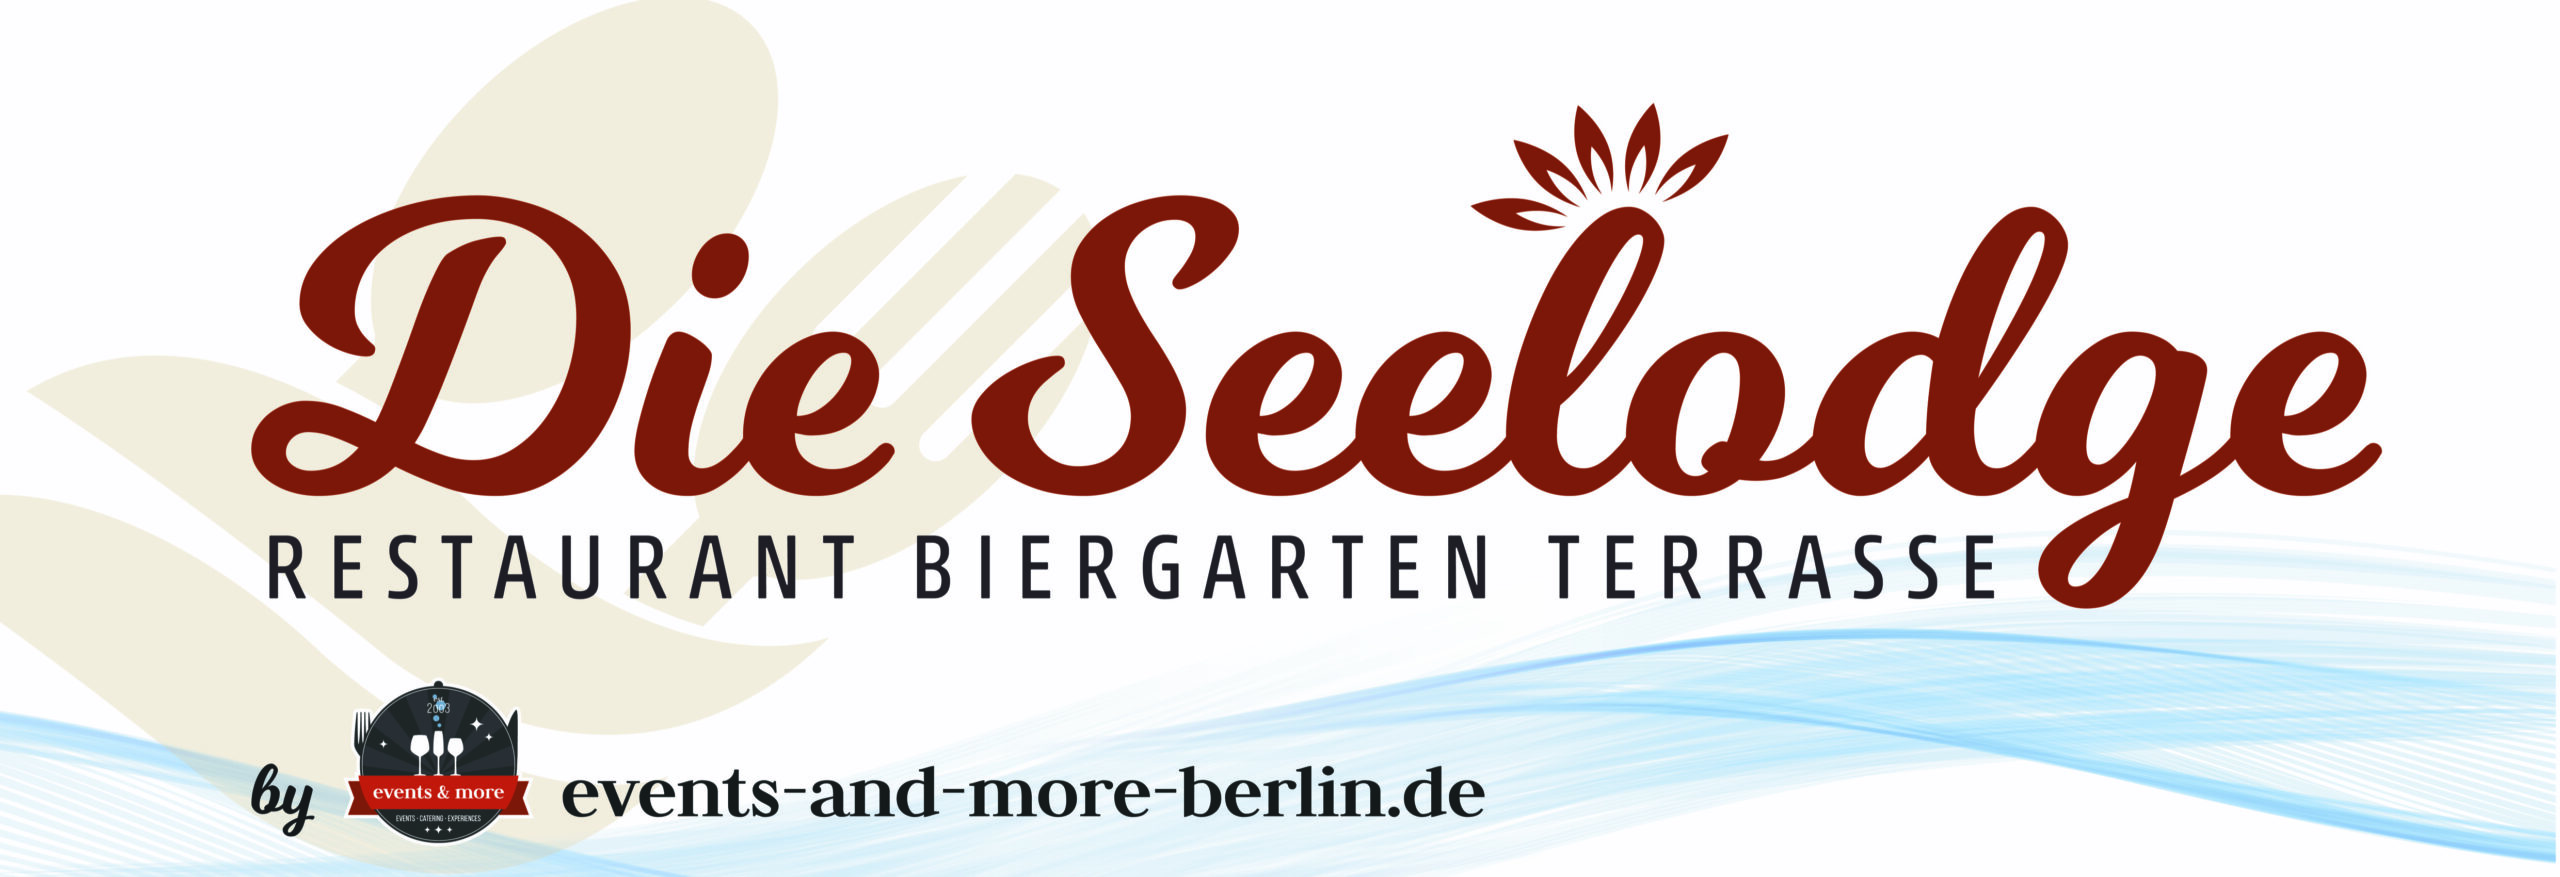 Seelodge_Logo